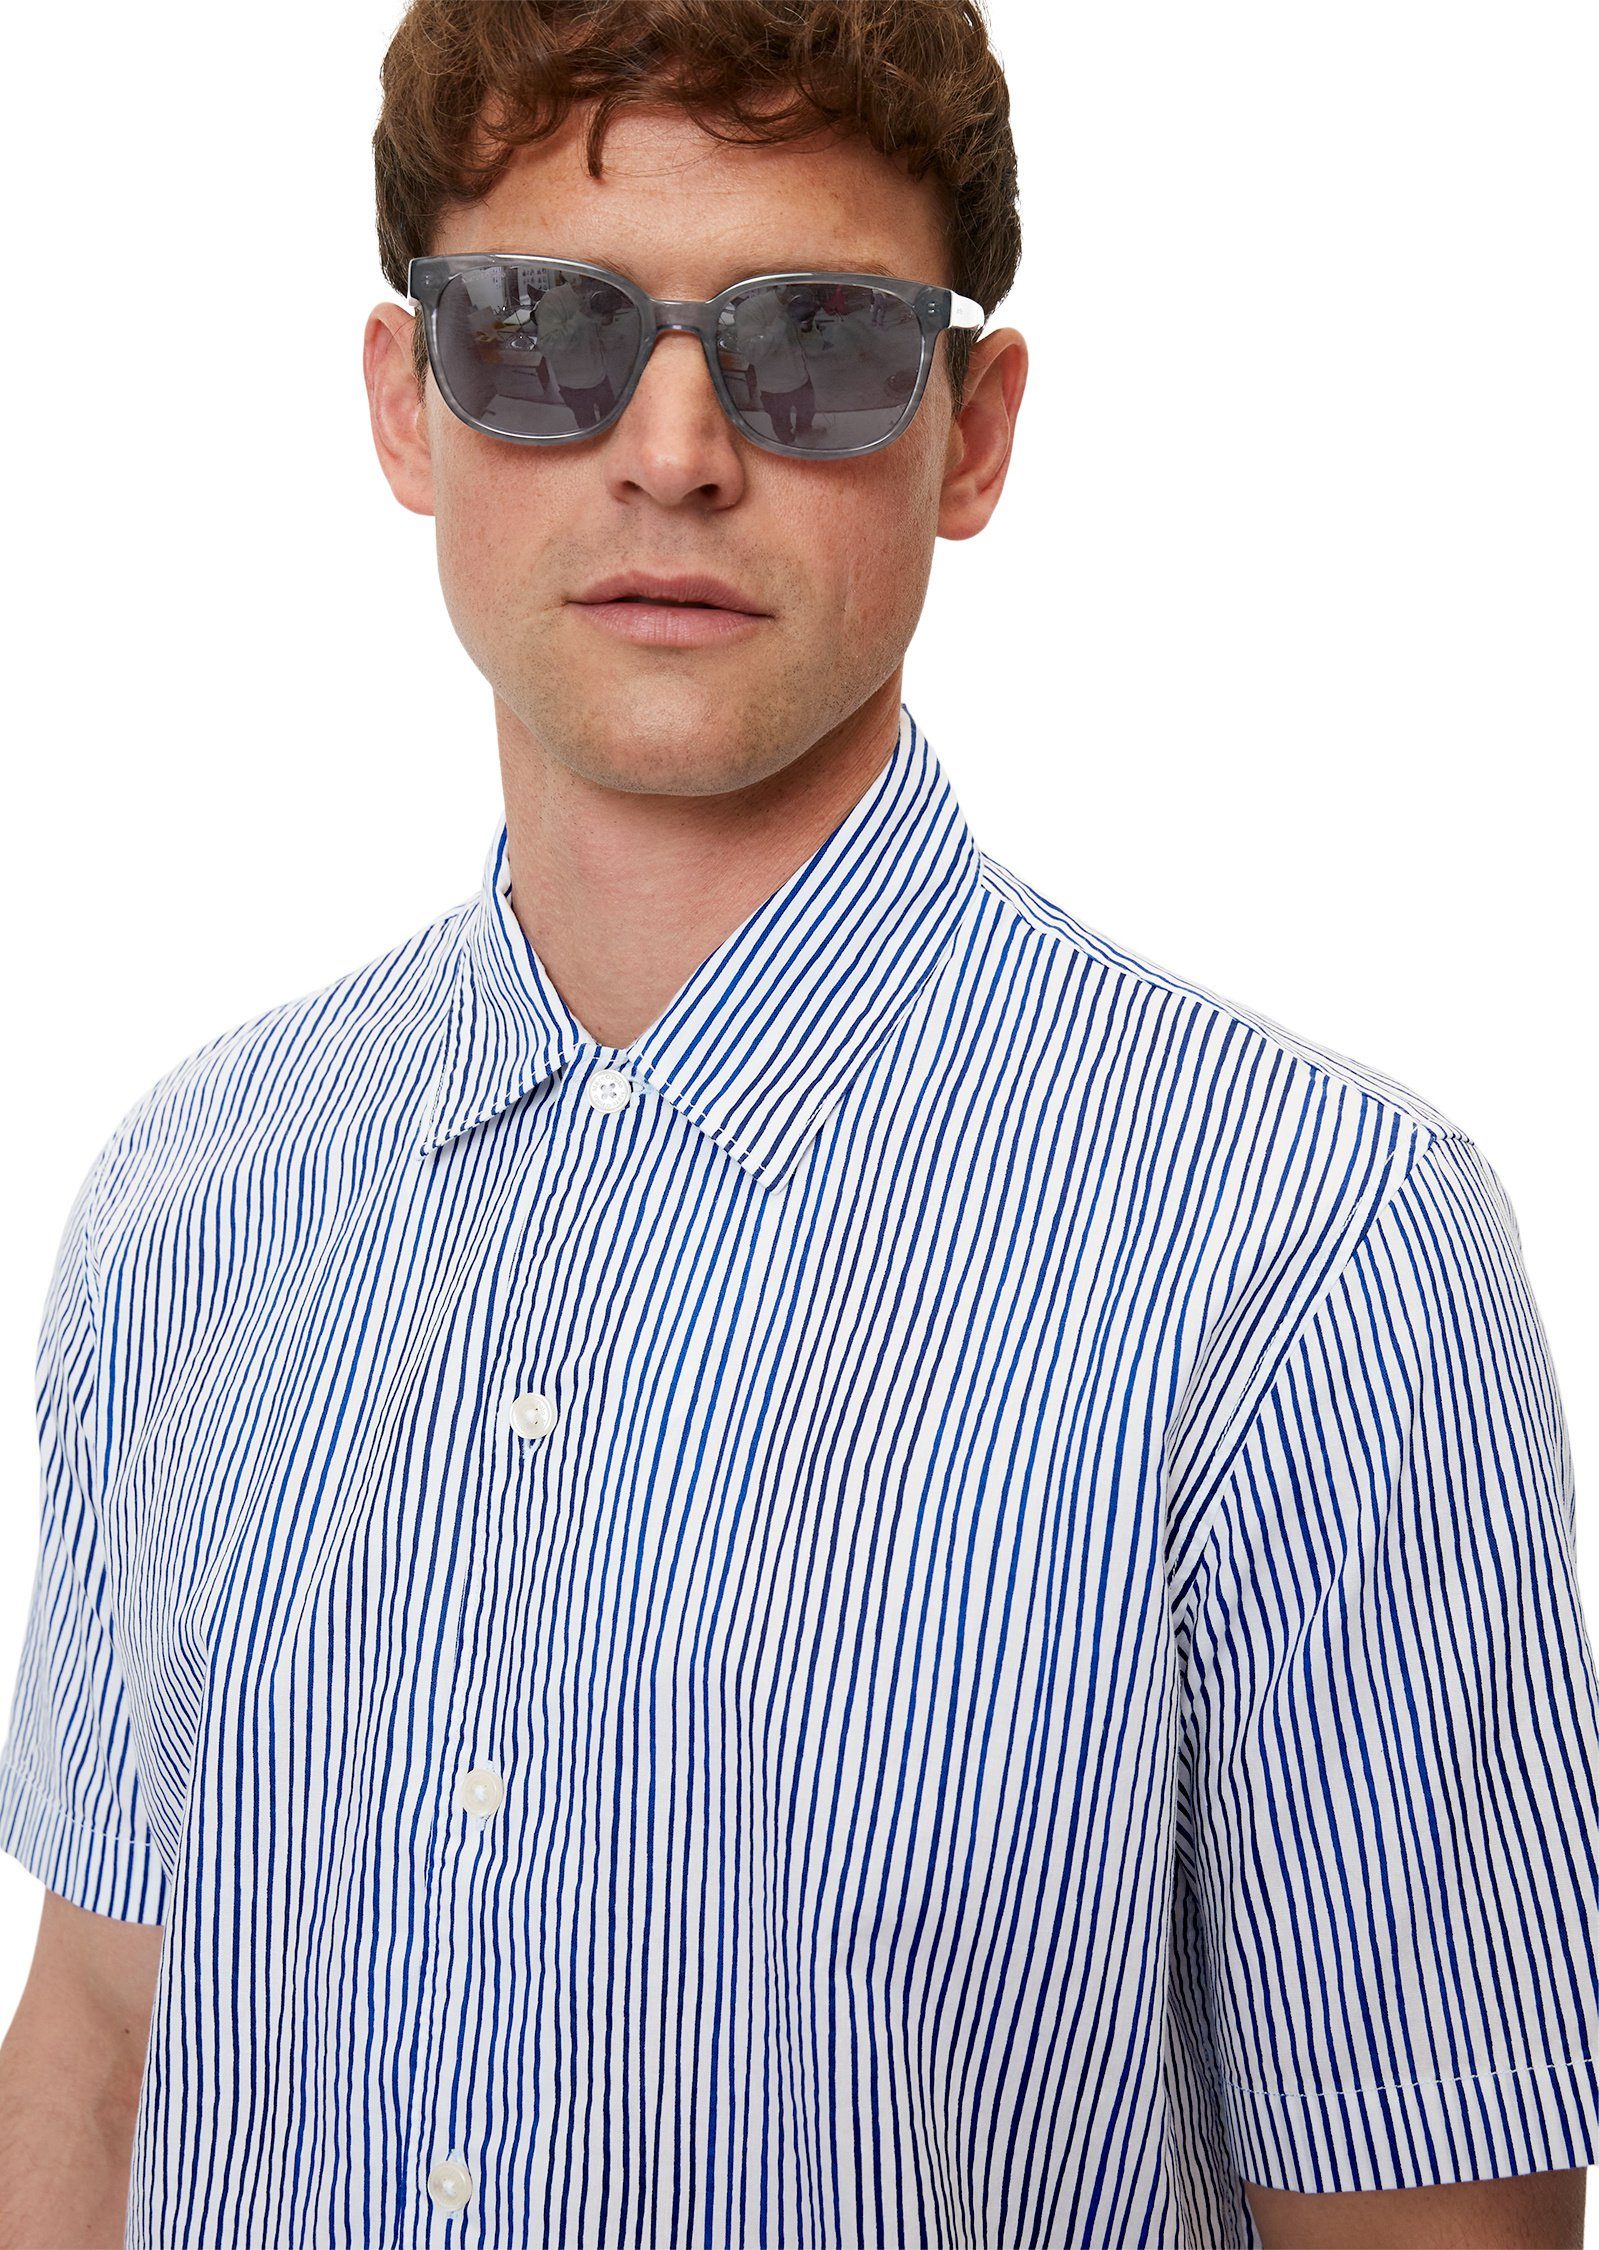 Kurzarmhemd hochwertiger O'Polo Marc in Popeline-Qualität